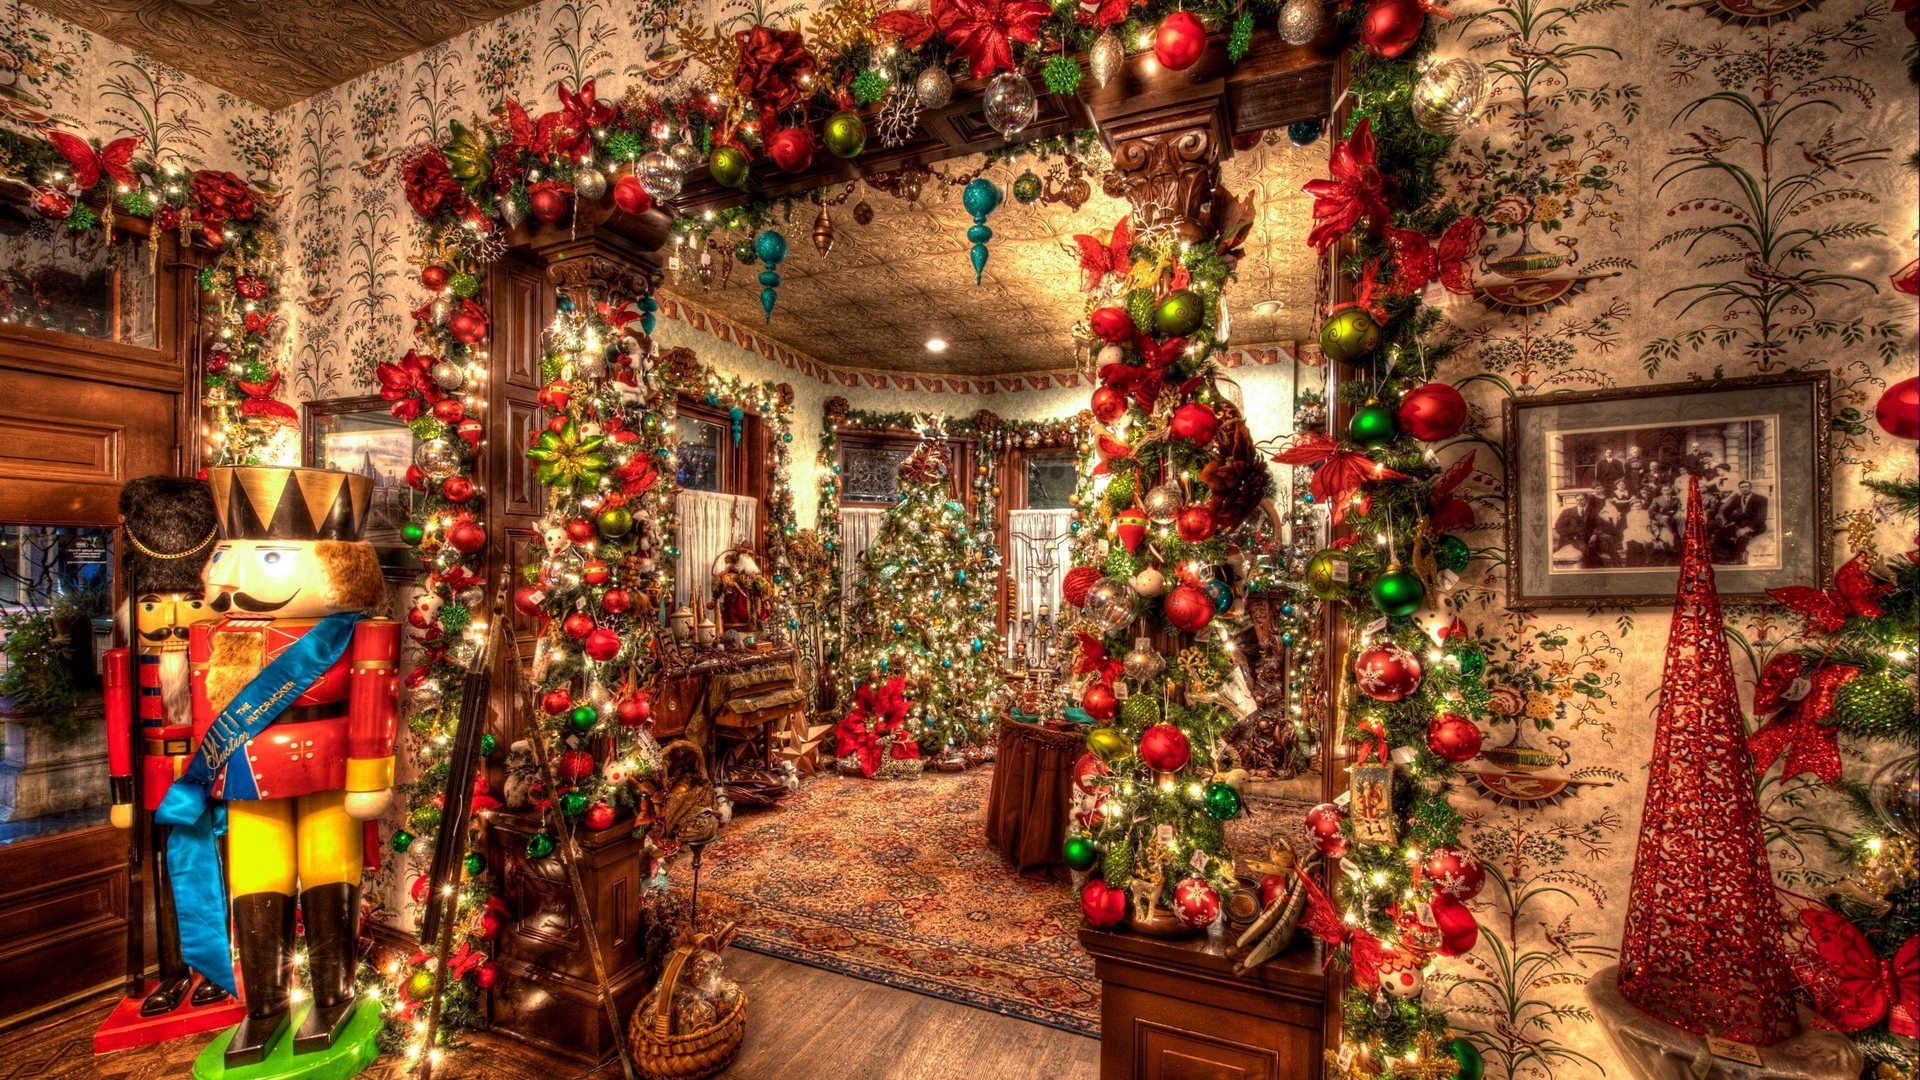 Download wallpaper 1920x1080 holiday, christmas, ornaments